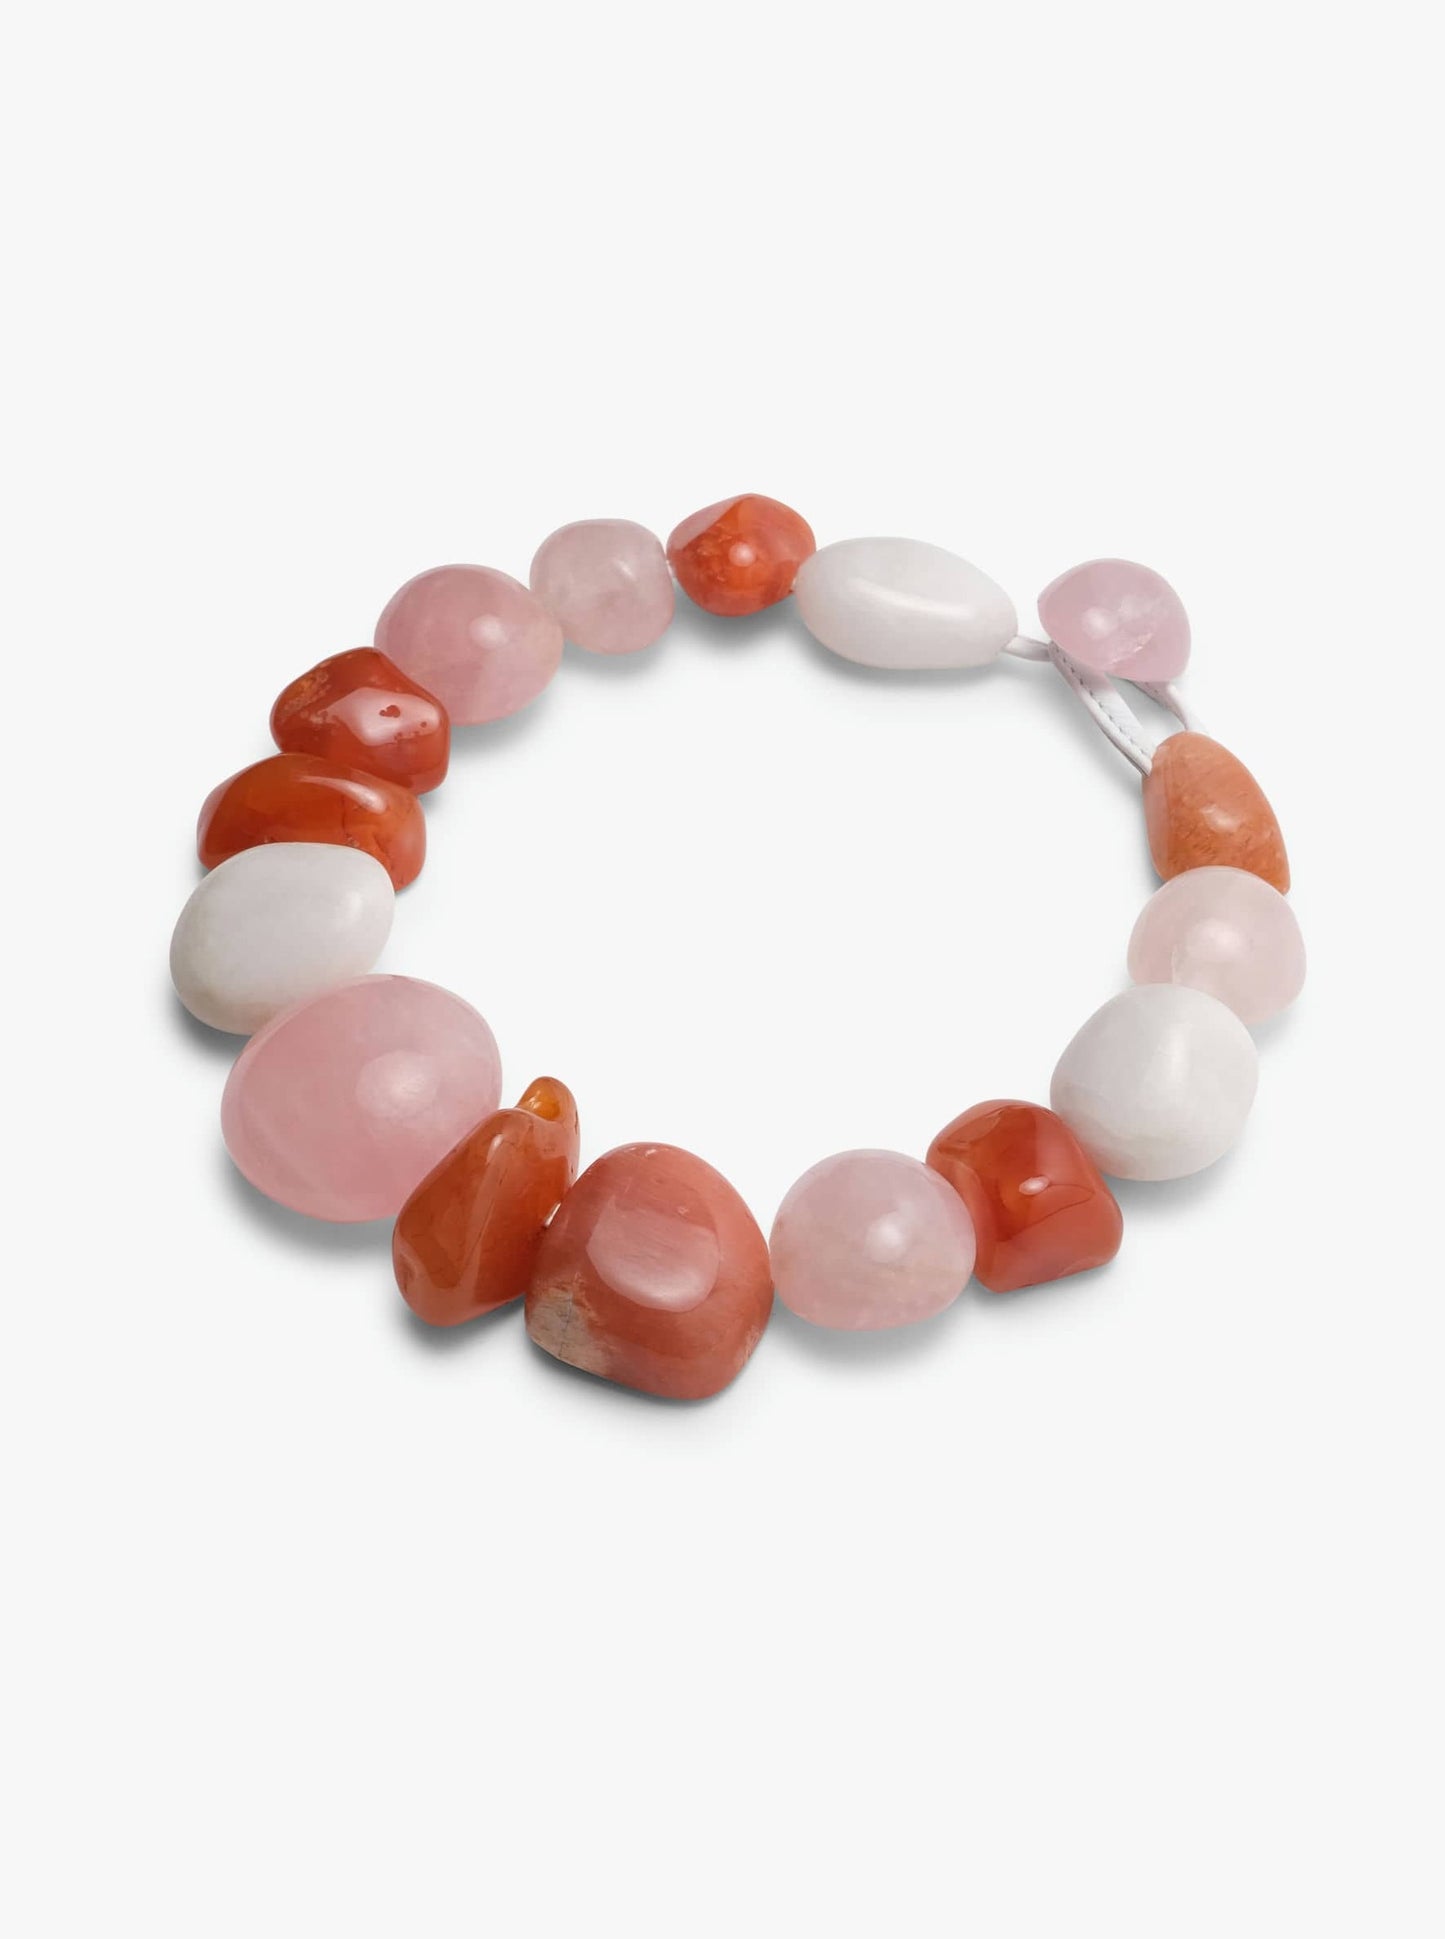 Necklace: agate, carneol, rose quartz